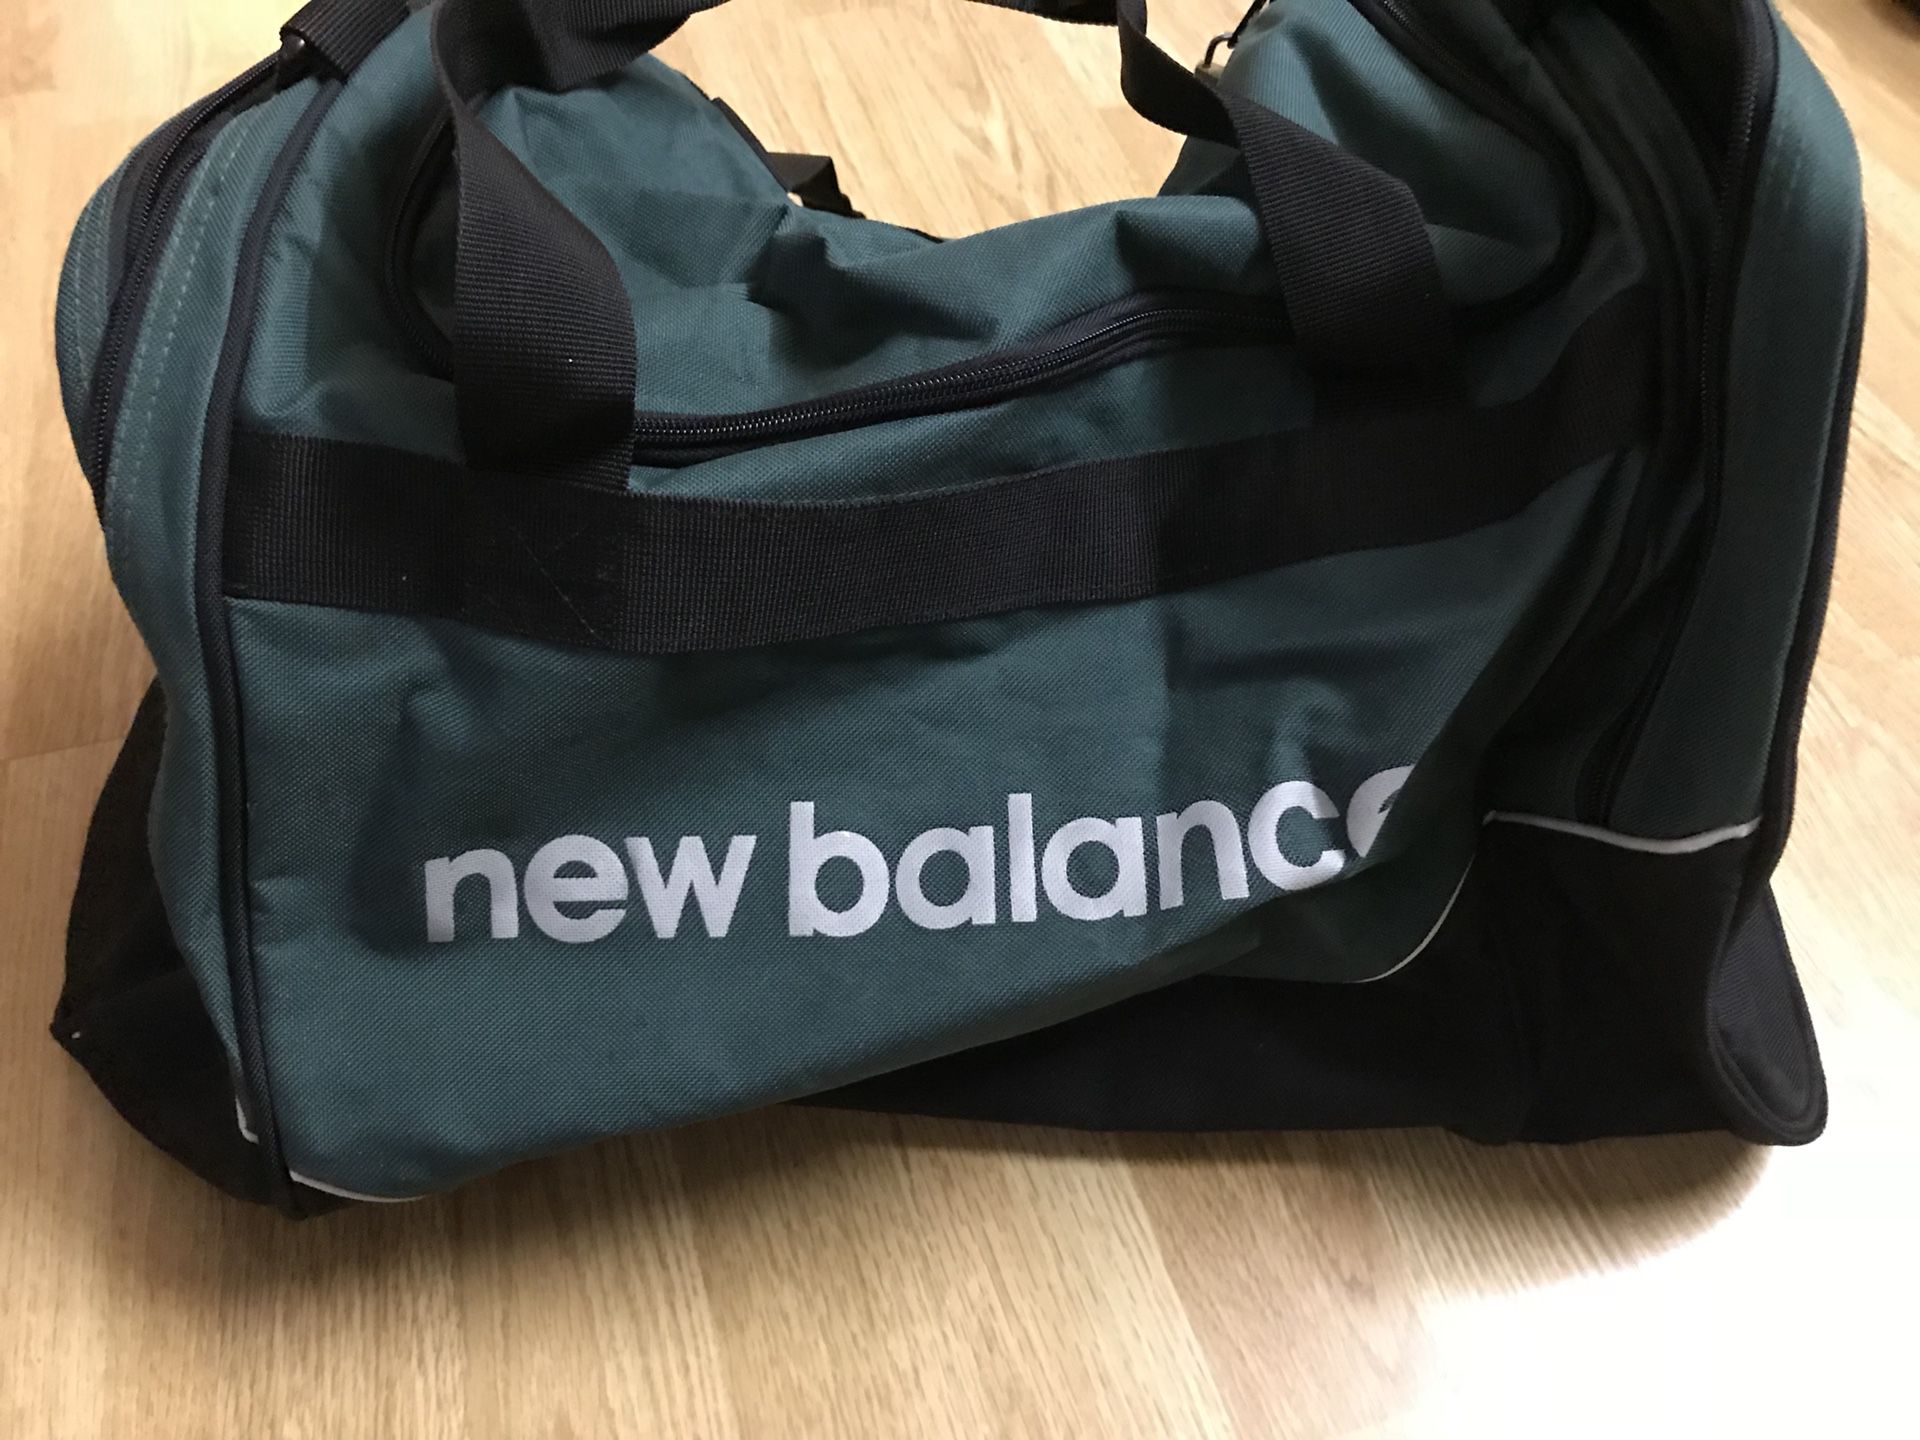 New balance travel bag